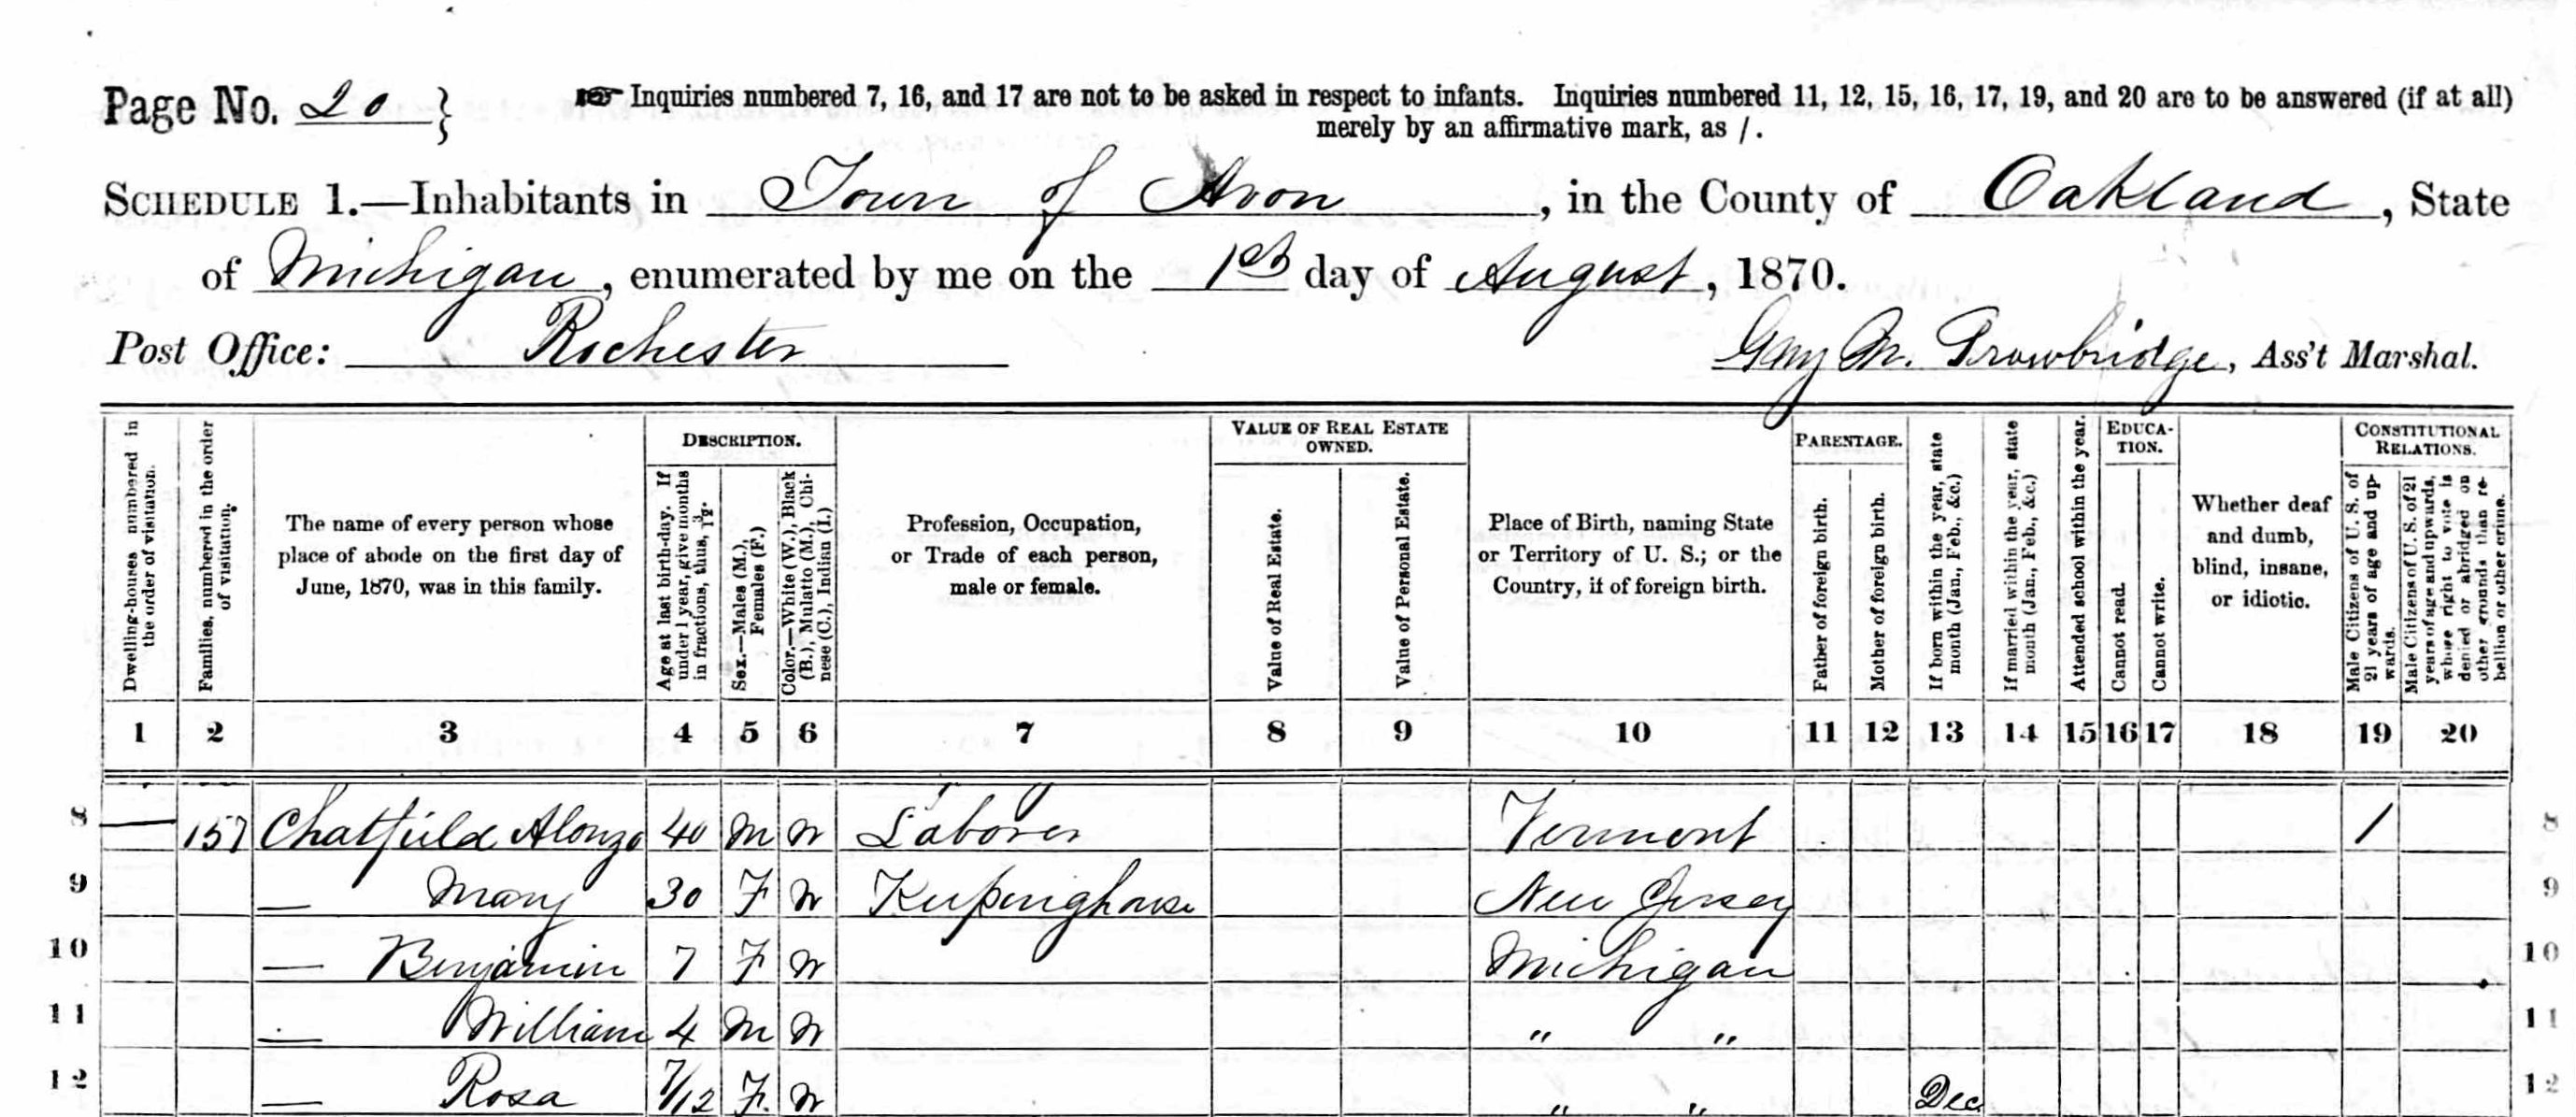 CHATFIELD Alonzo c1812- census 1870.jpg